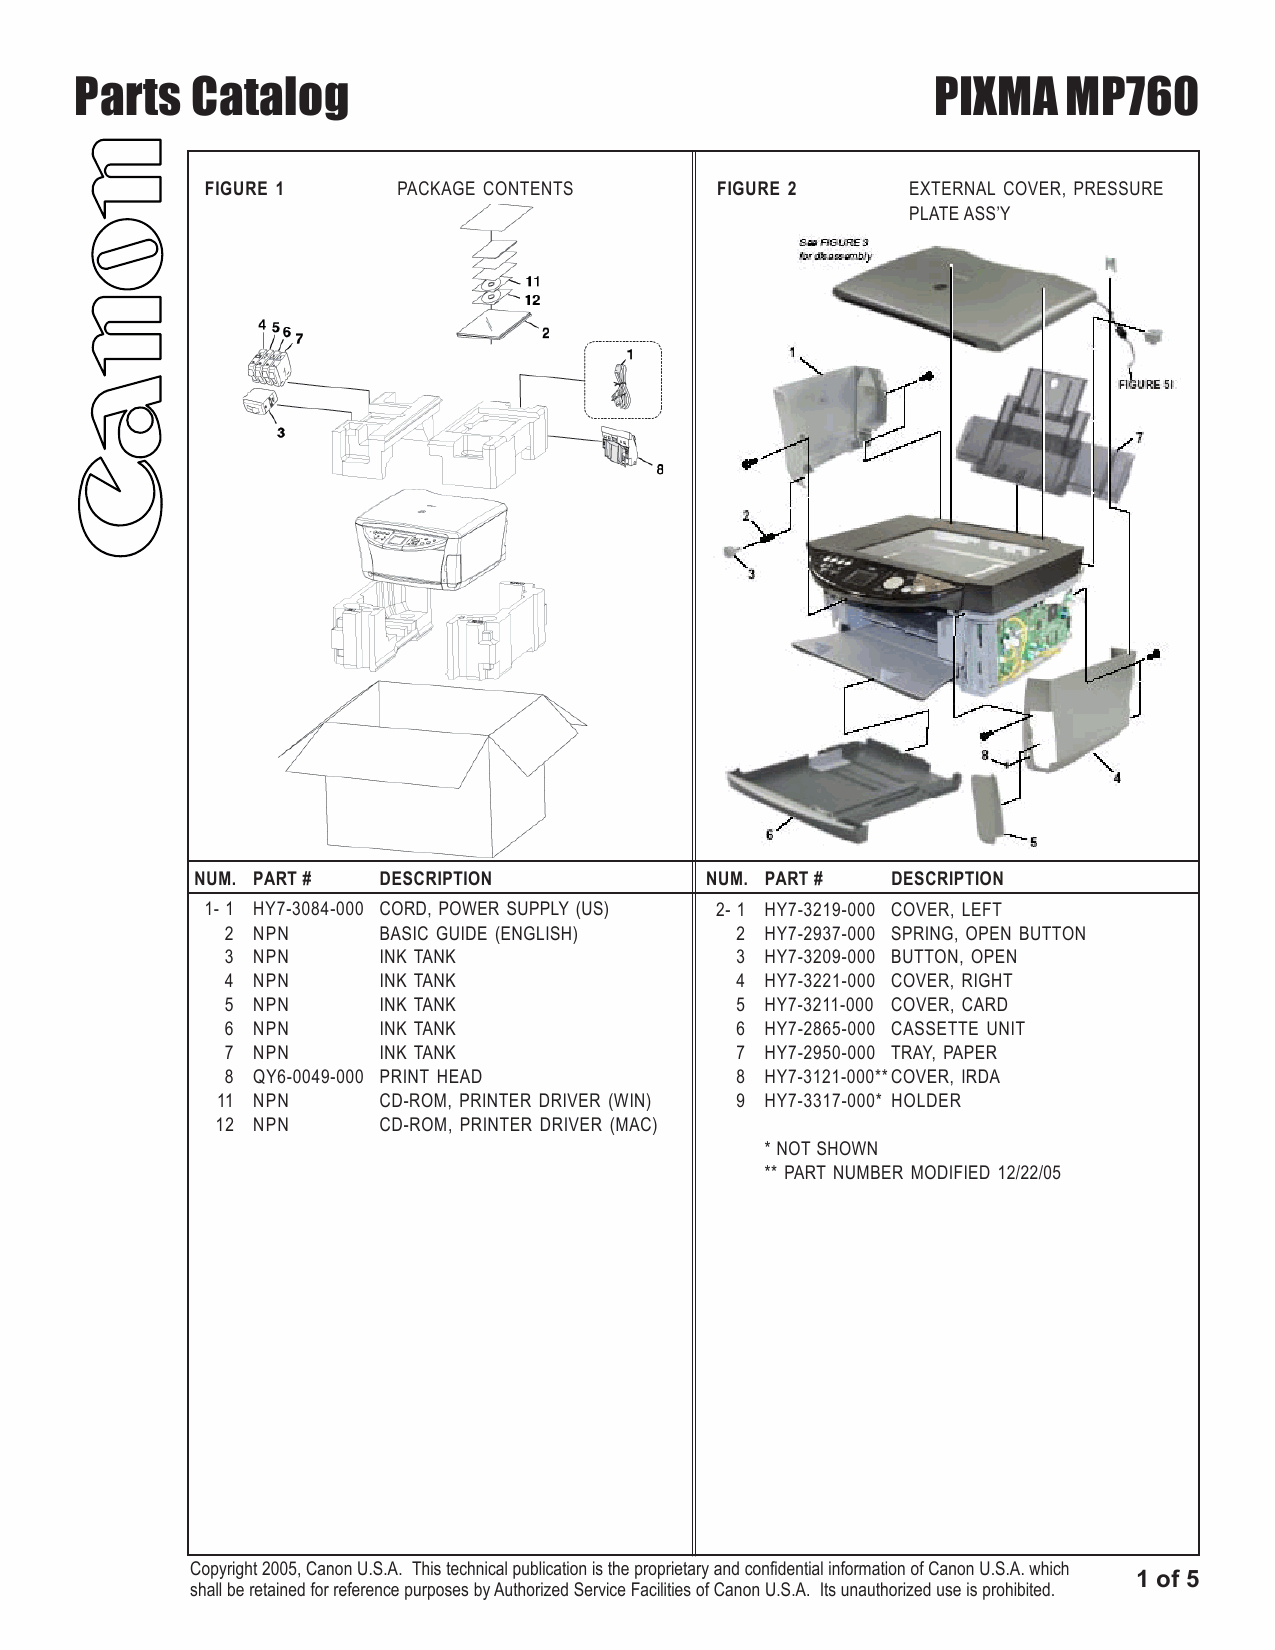 Canon PIXMA MP760 Parts Catalog Manual-2